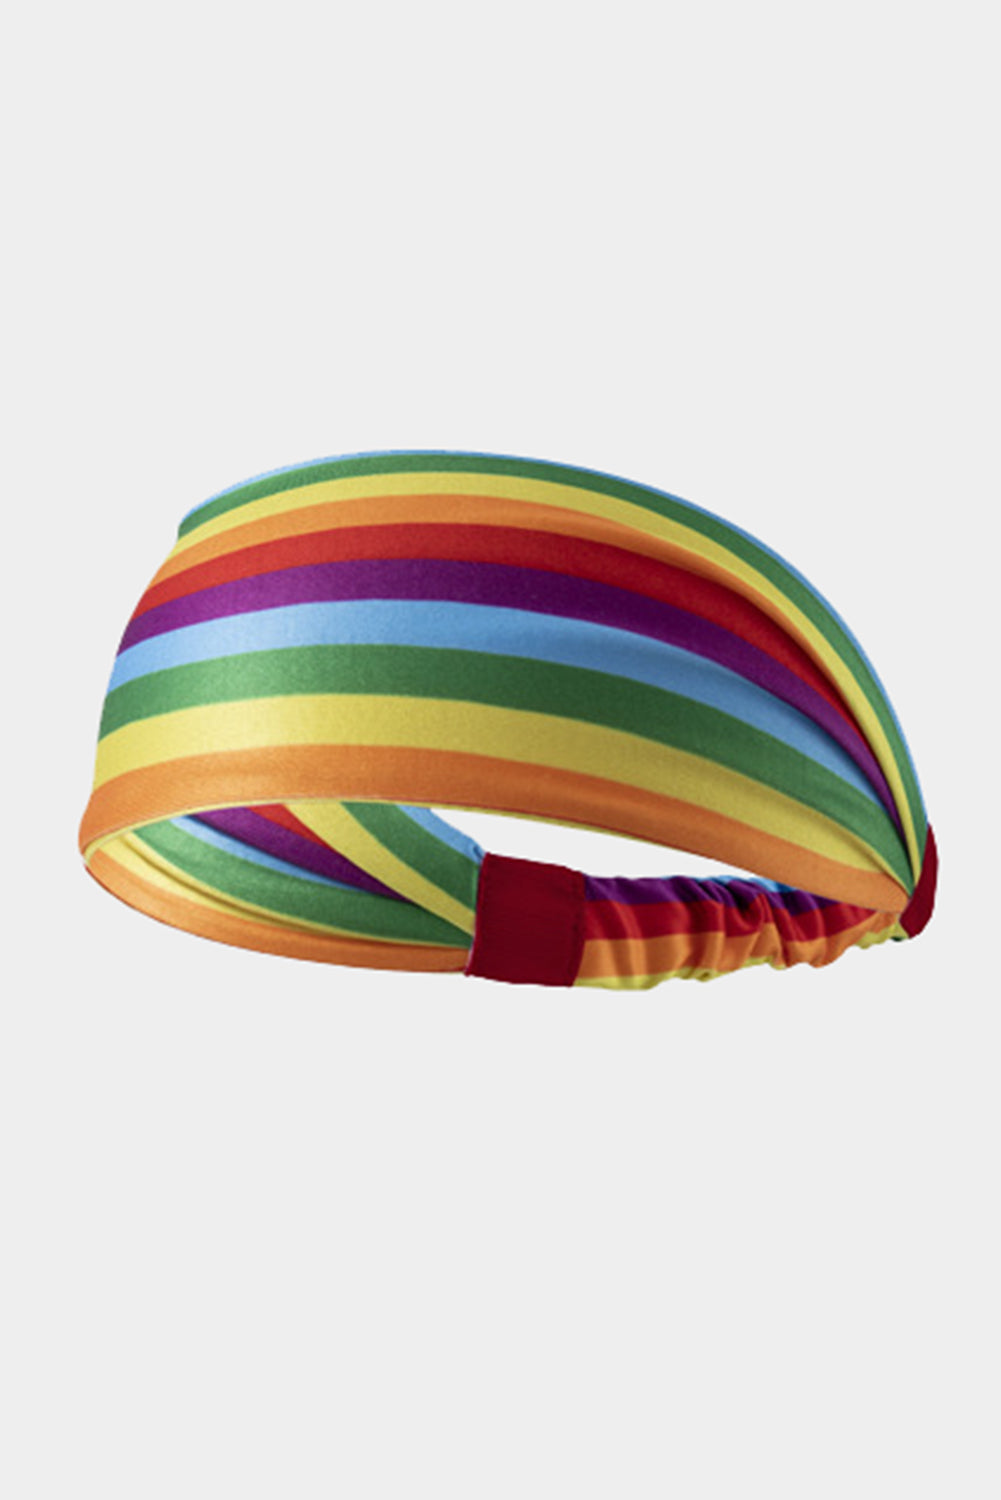 BH042004-2022, Multicolor Rainbow Sport Yoga Wide Headband Hair Accessories Pride Accessories Decor